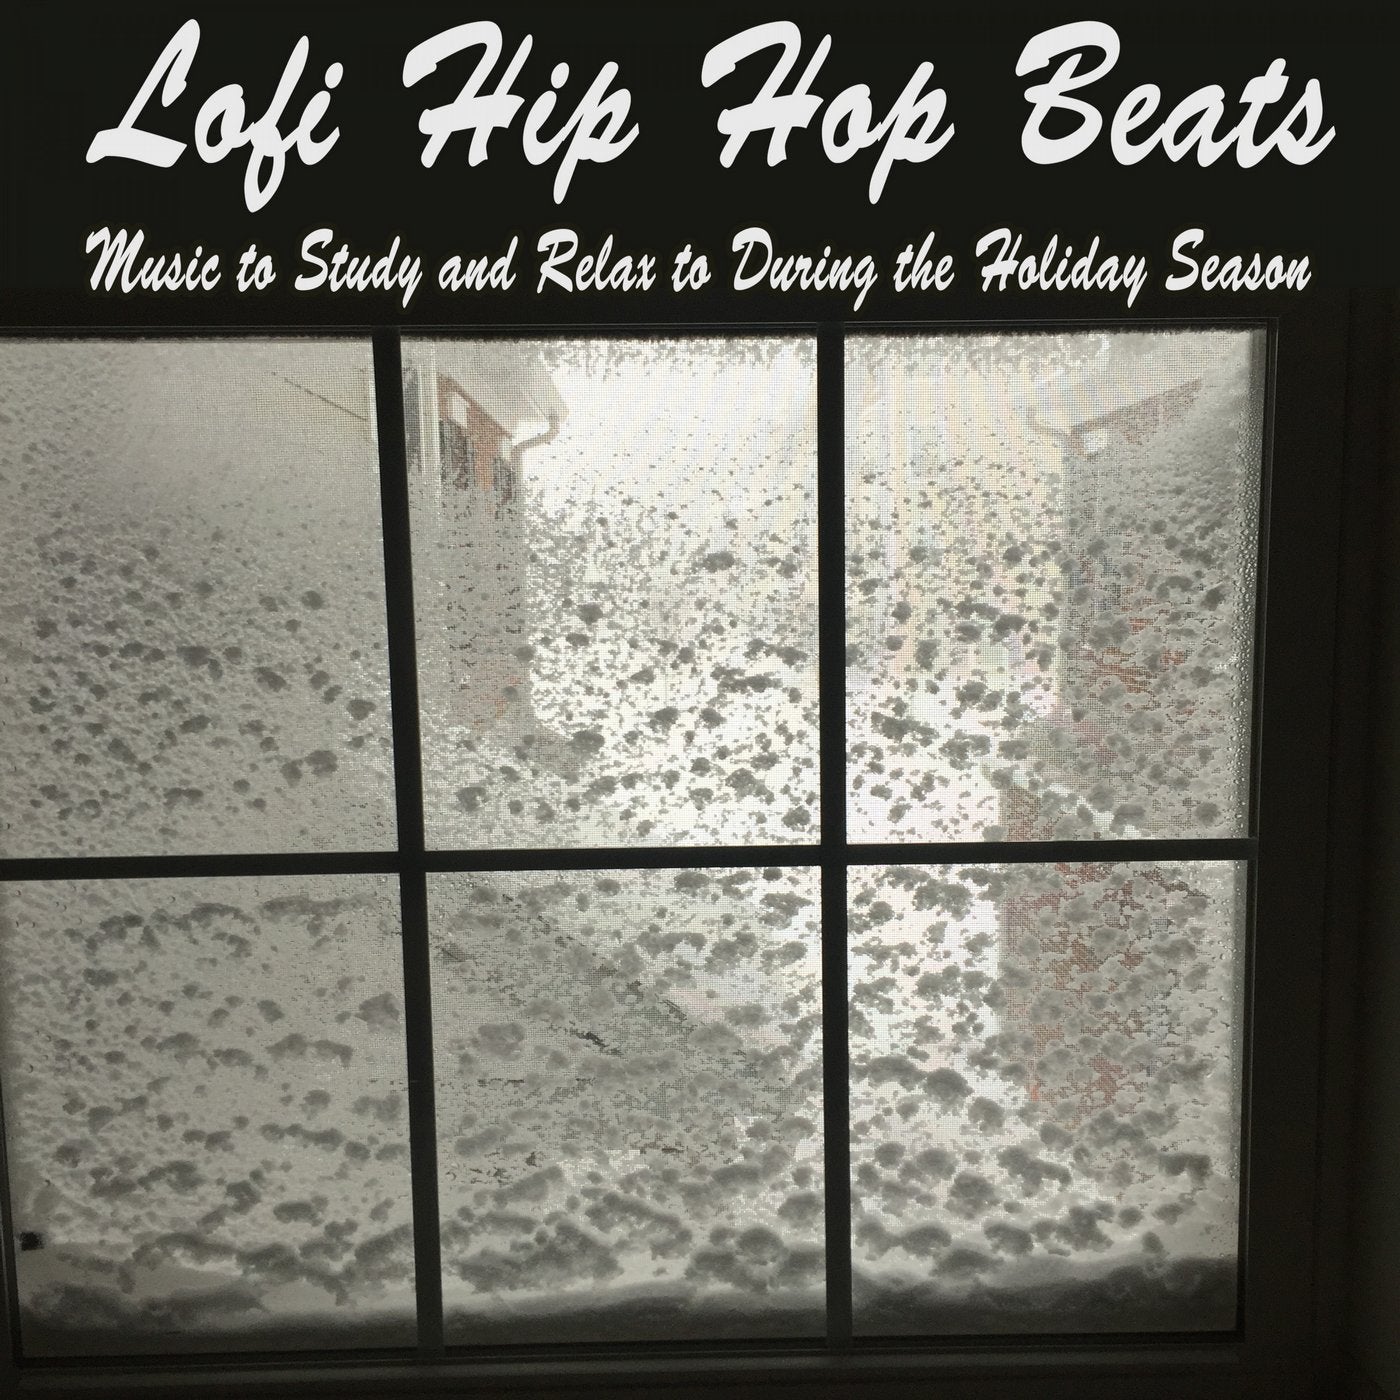 Lofi Hip Hop Beats - Music to Study and Relax to During the Holiday Season & DJ Mix (Instrumental, Lo-Fi, Chill, Jazz Hip Hop Beats, Easy Listening)